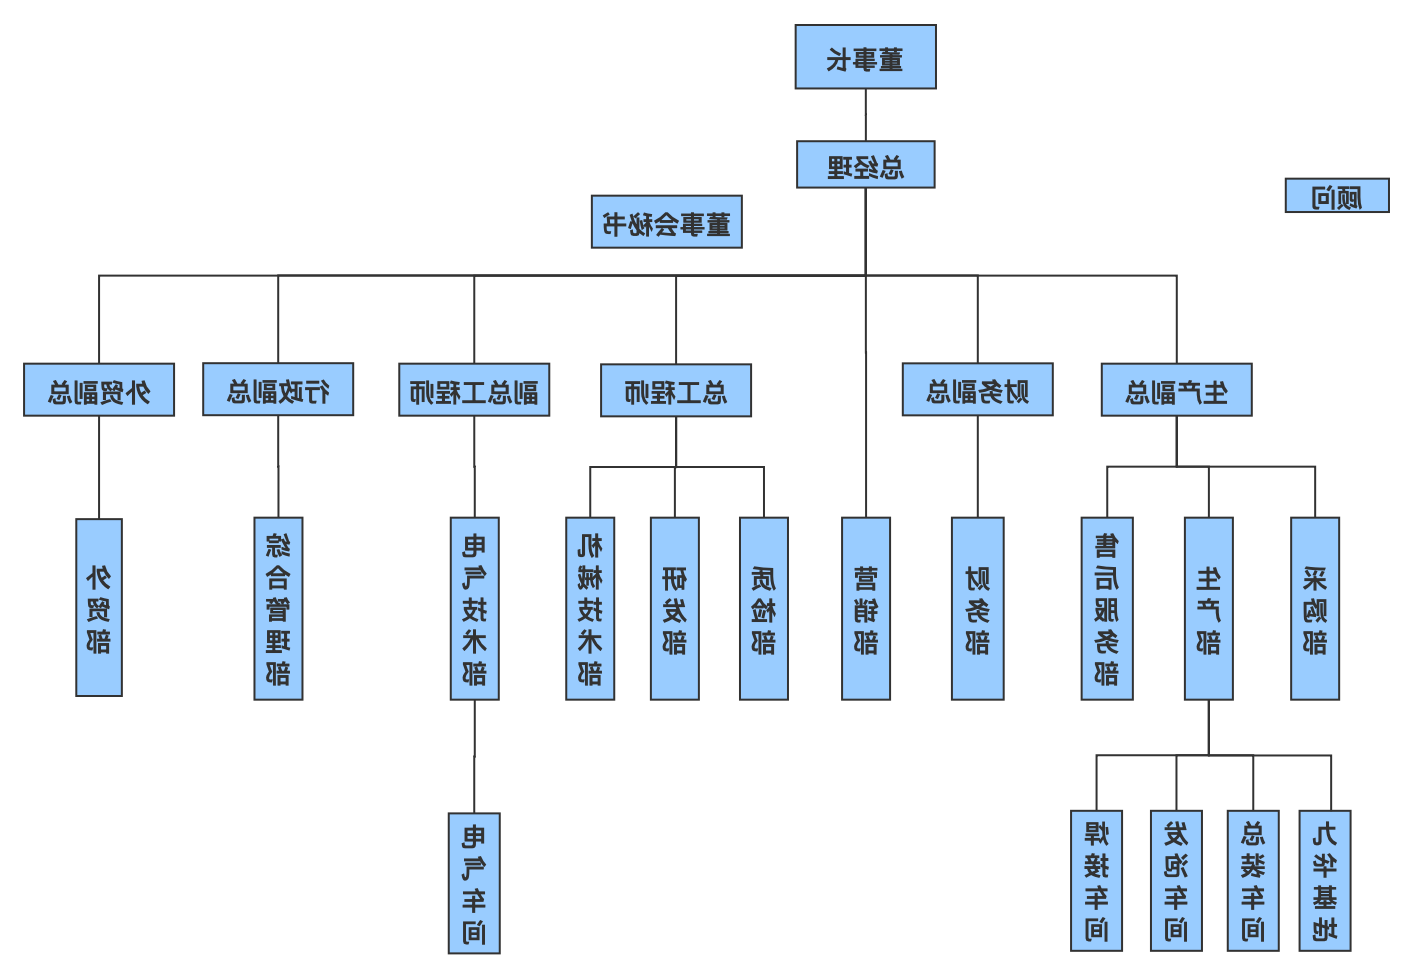 公司组织结构图.png